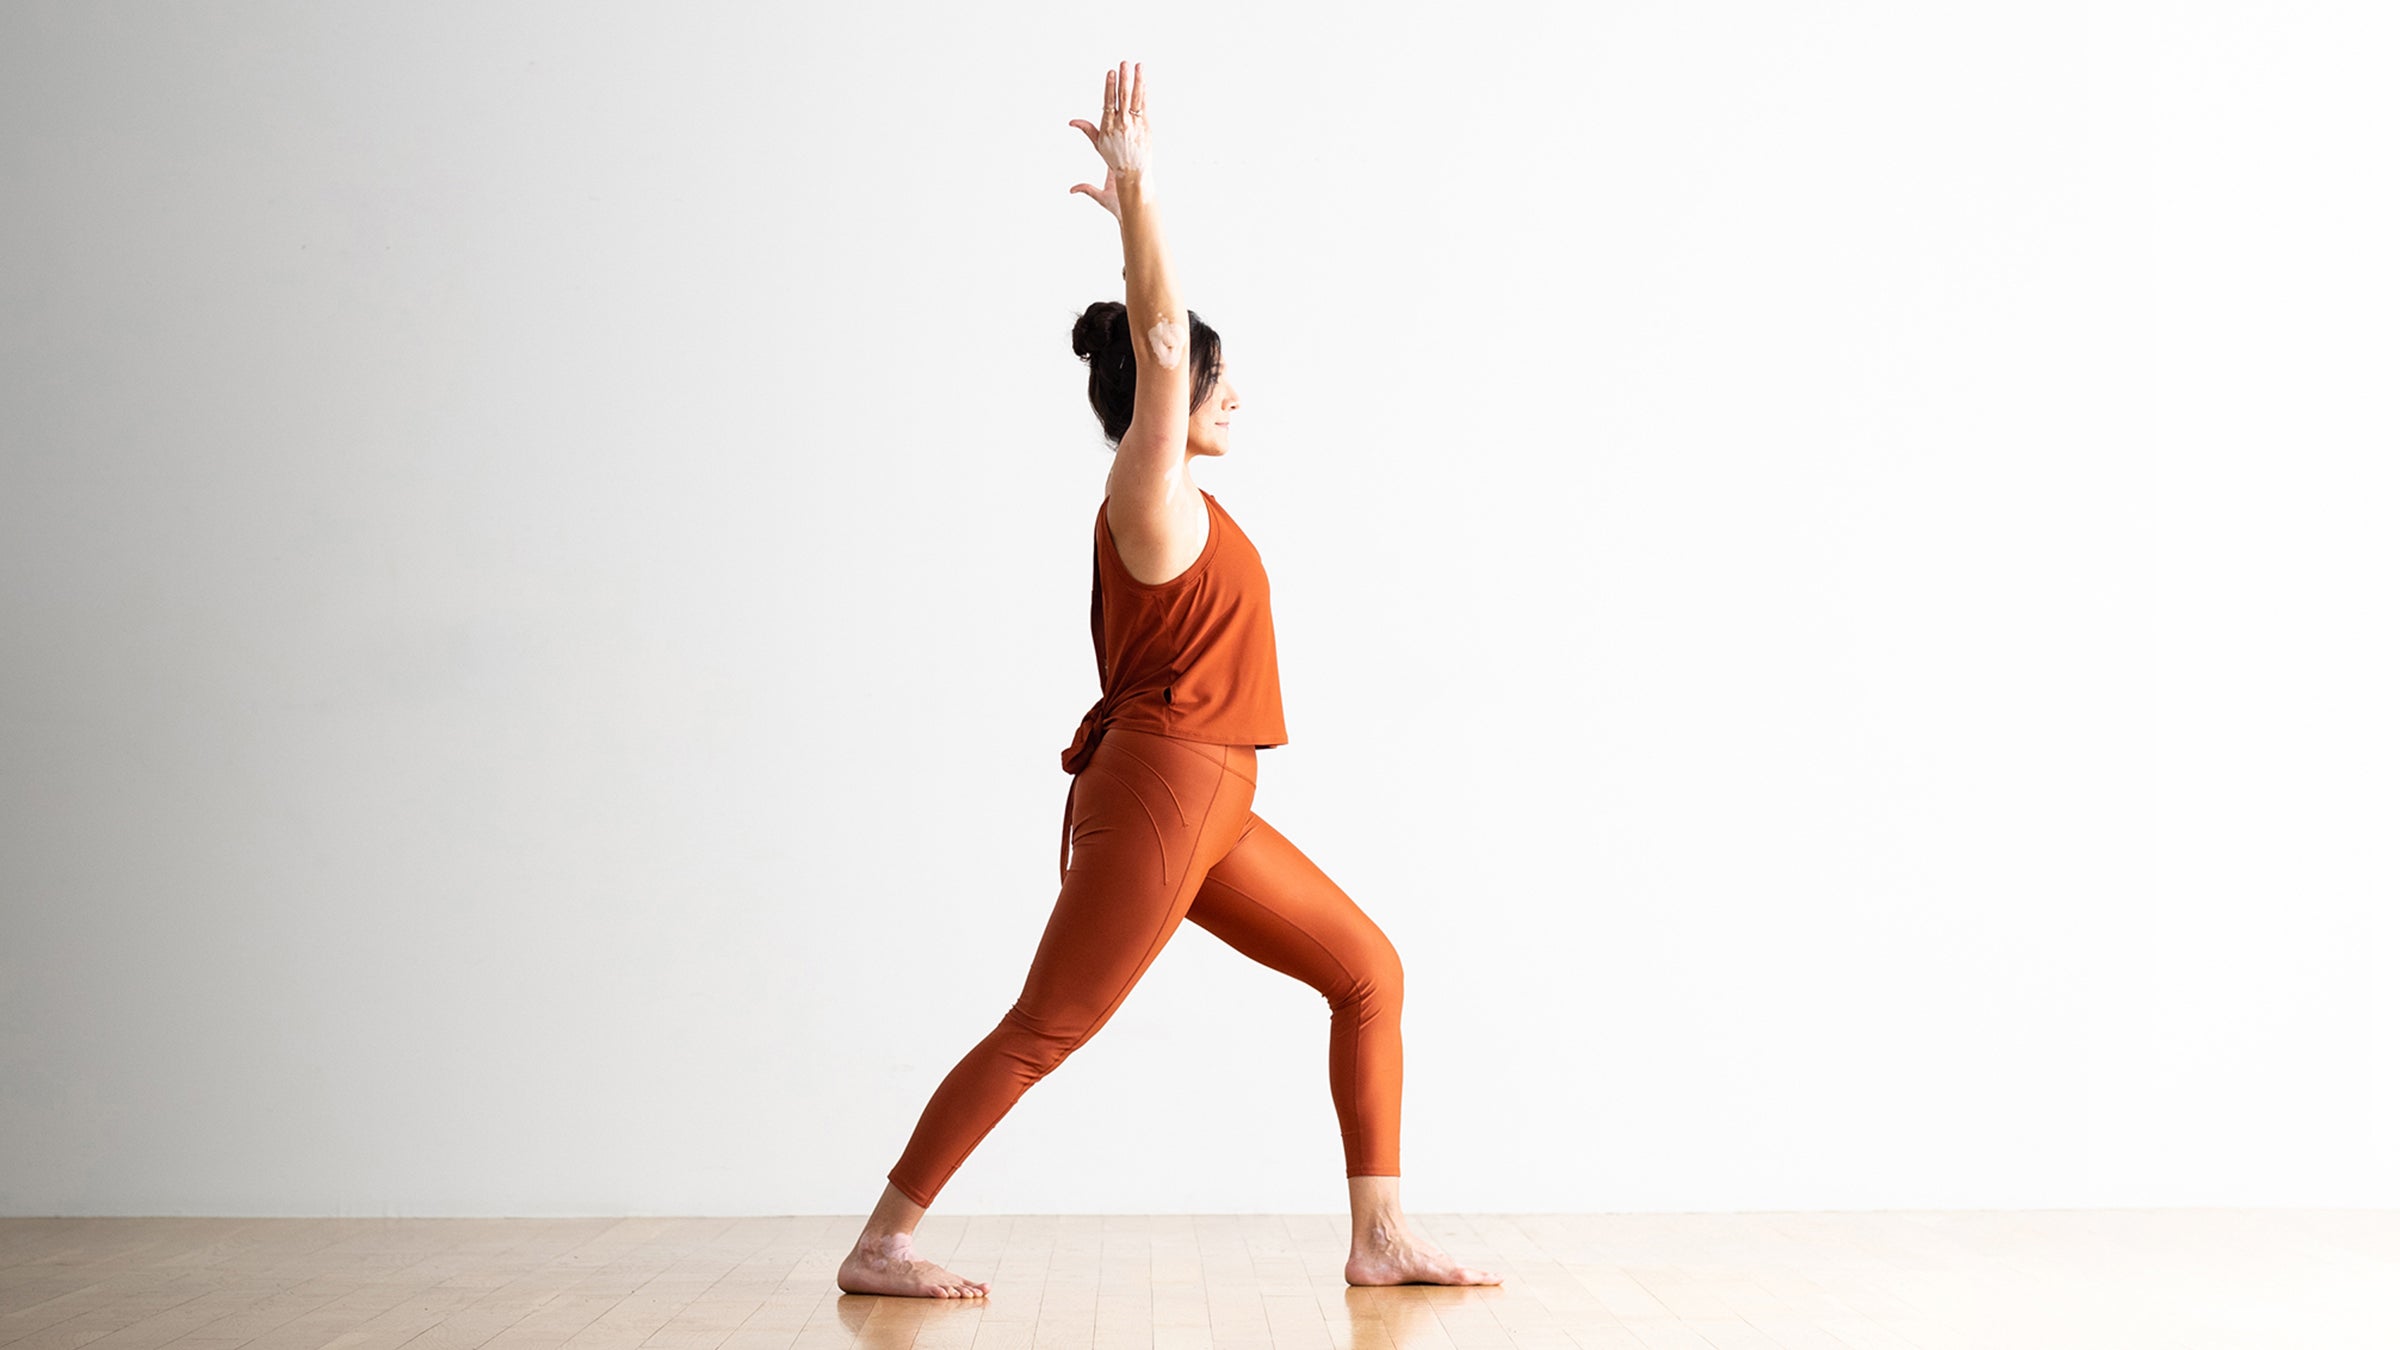 Yoga Poses | Learn Proper Foot Position In Warrior 1, Virabhadrasana I